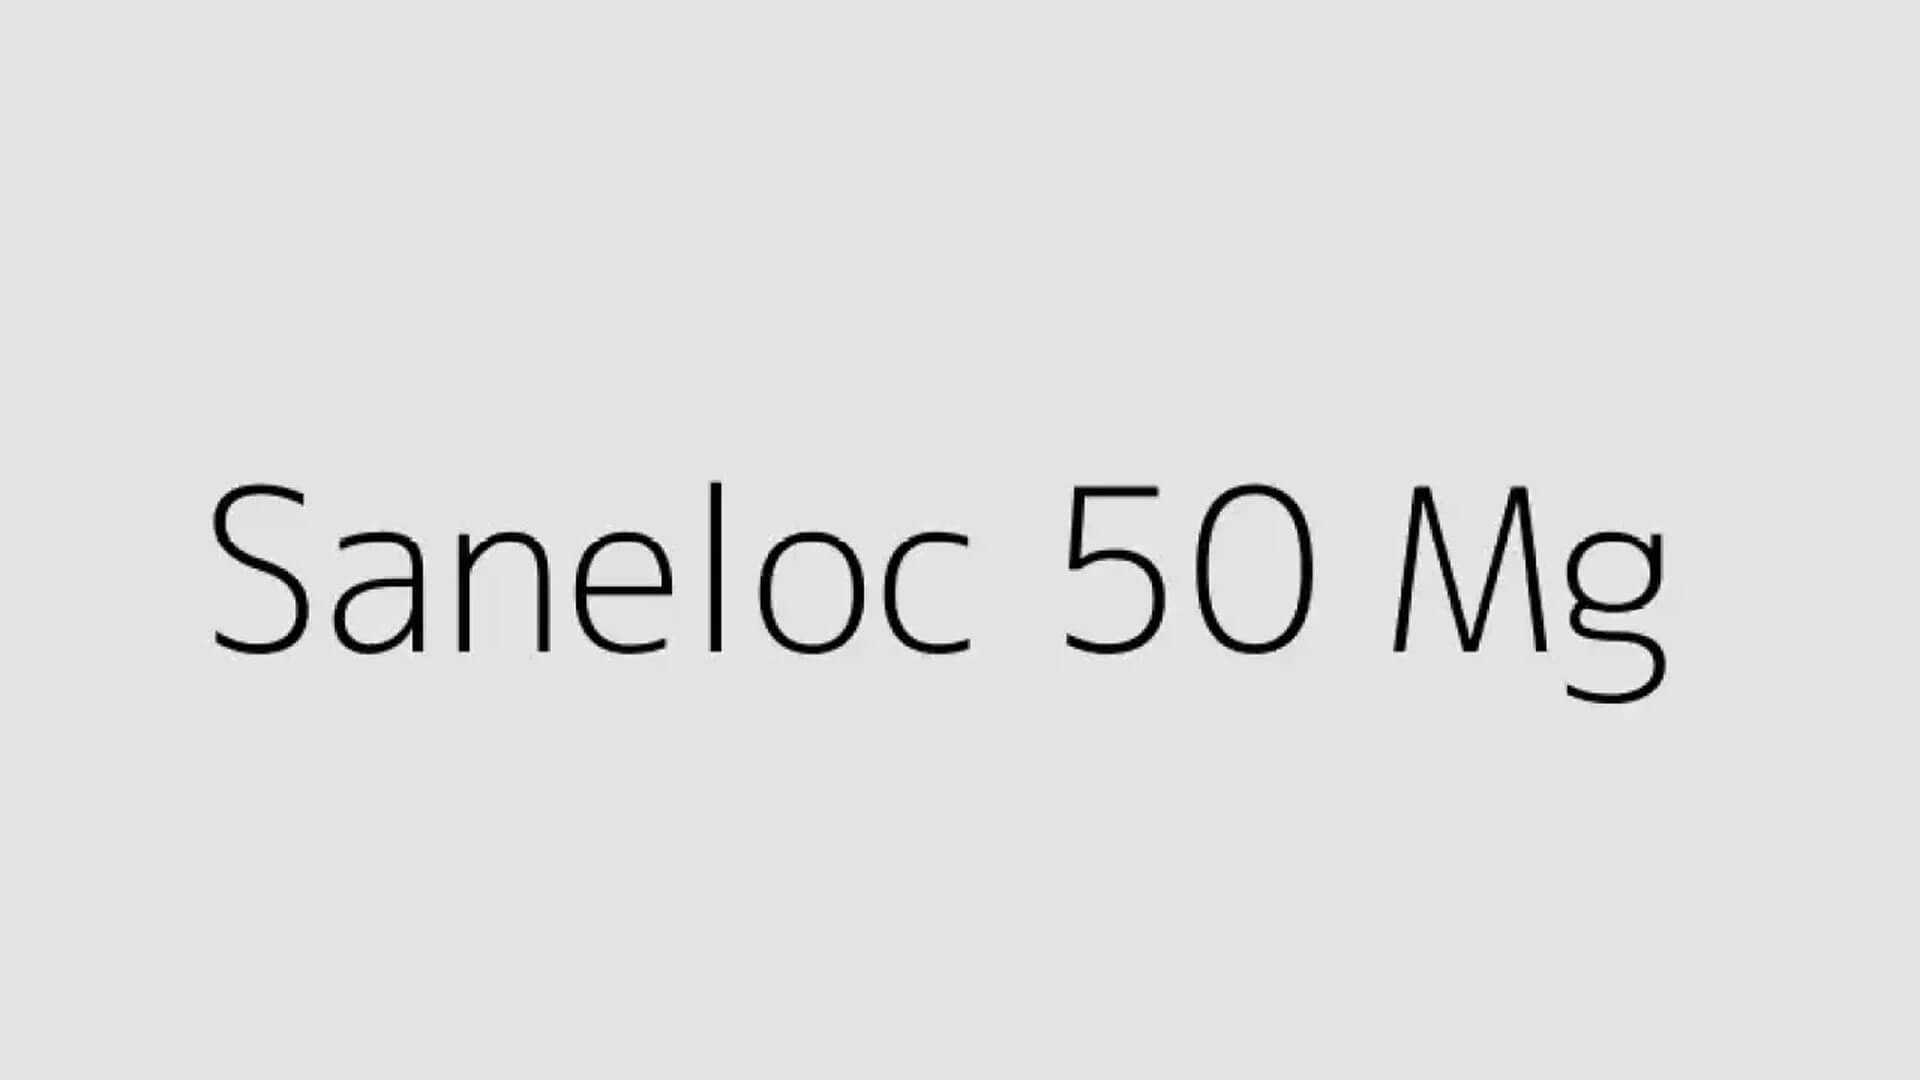 Saneloc 50 mg